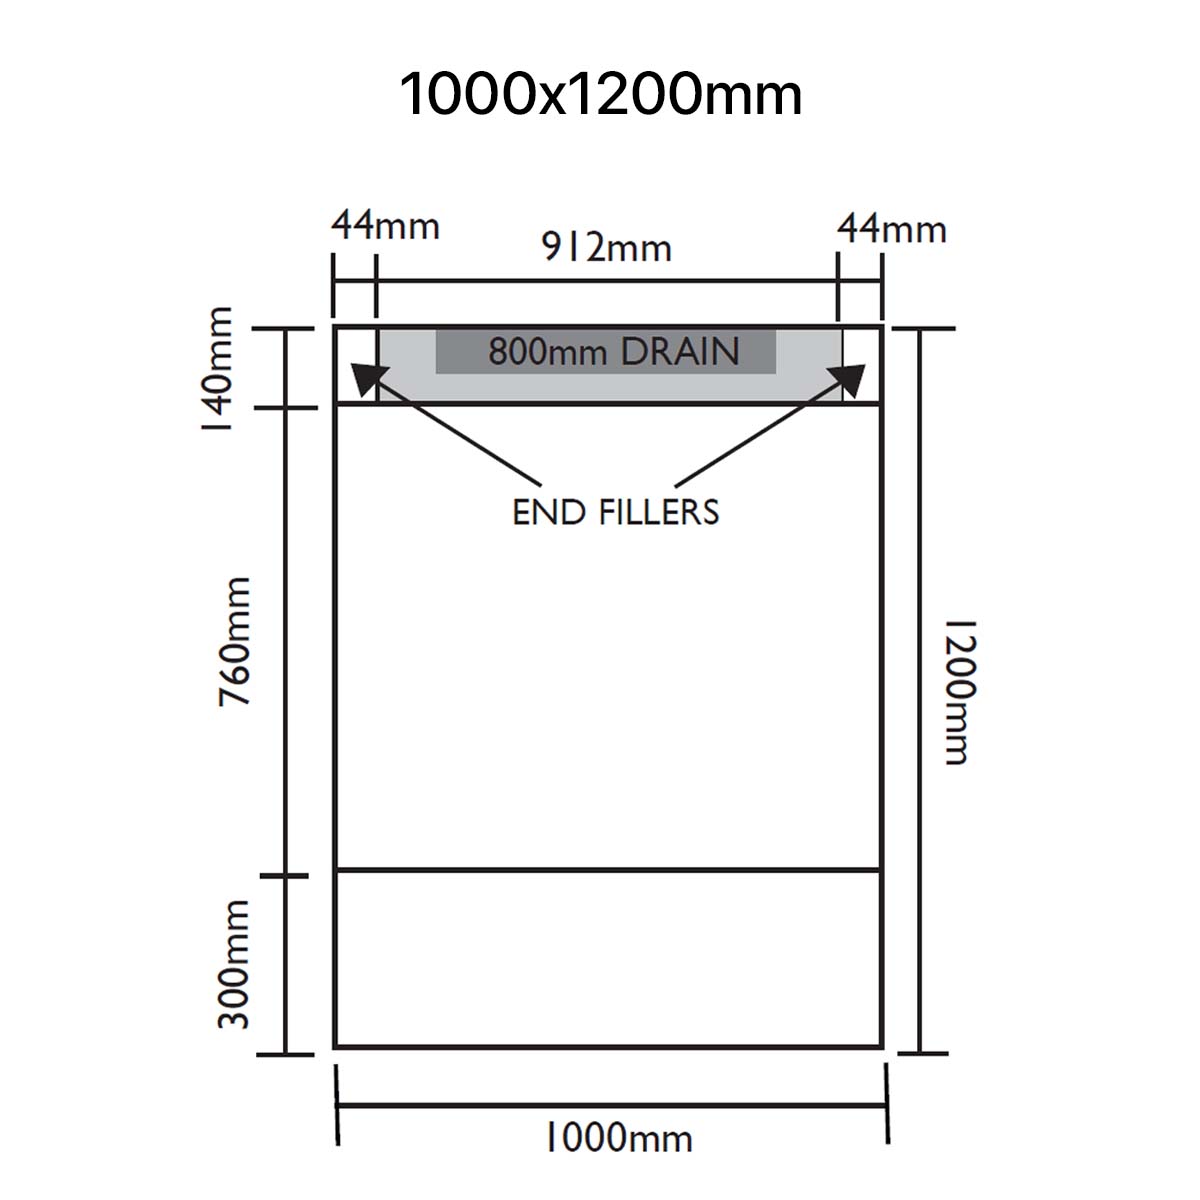 Unislope 1K linear drain 1000x1200mm dimensions